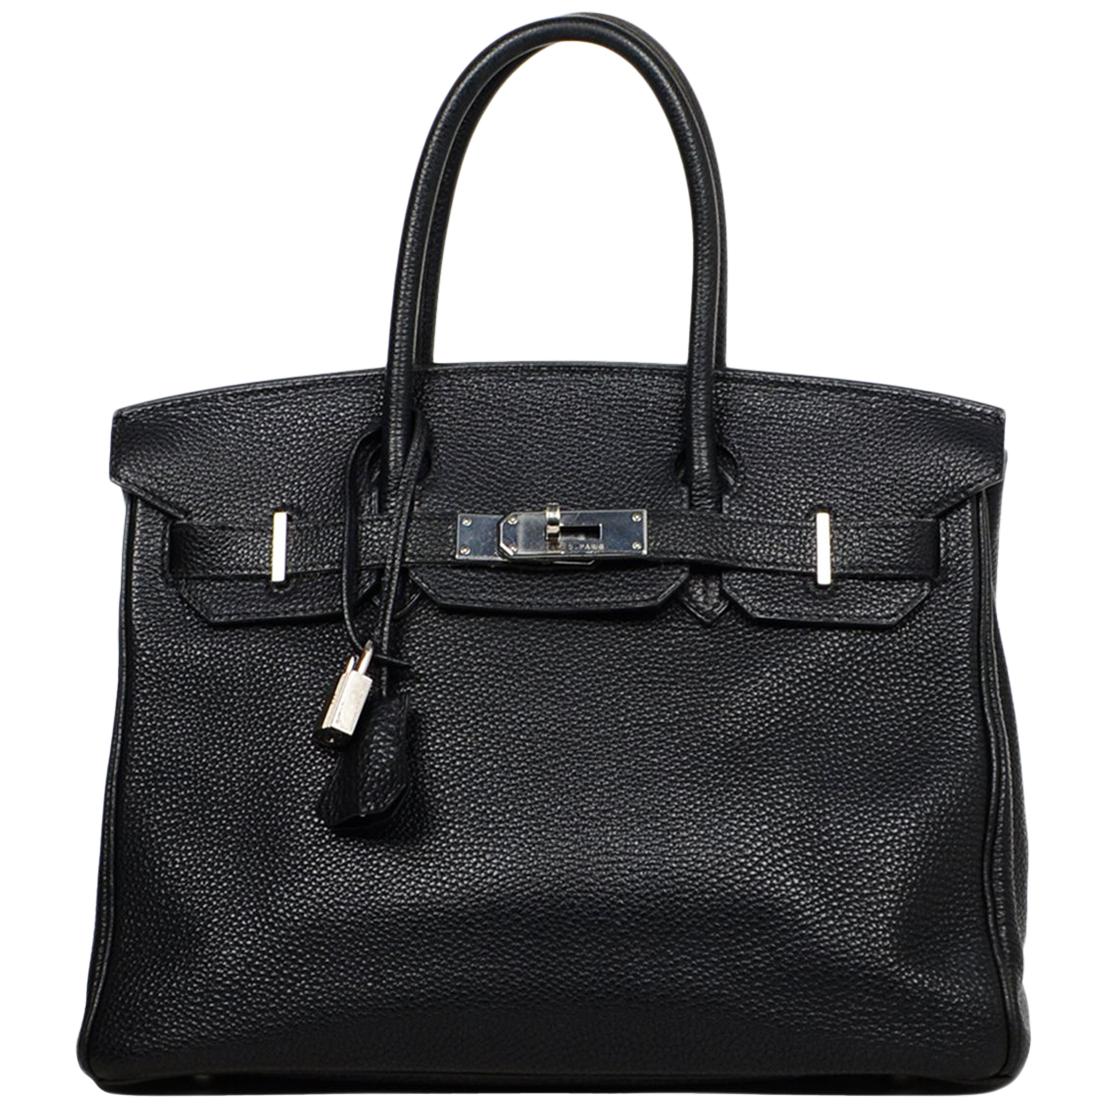 Hermes Black Togo Leather 30cm Birkin Bag W/ PHW